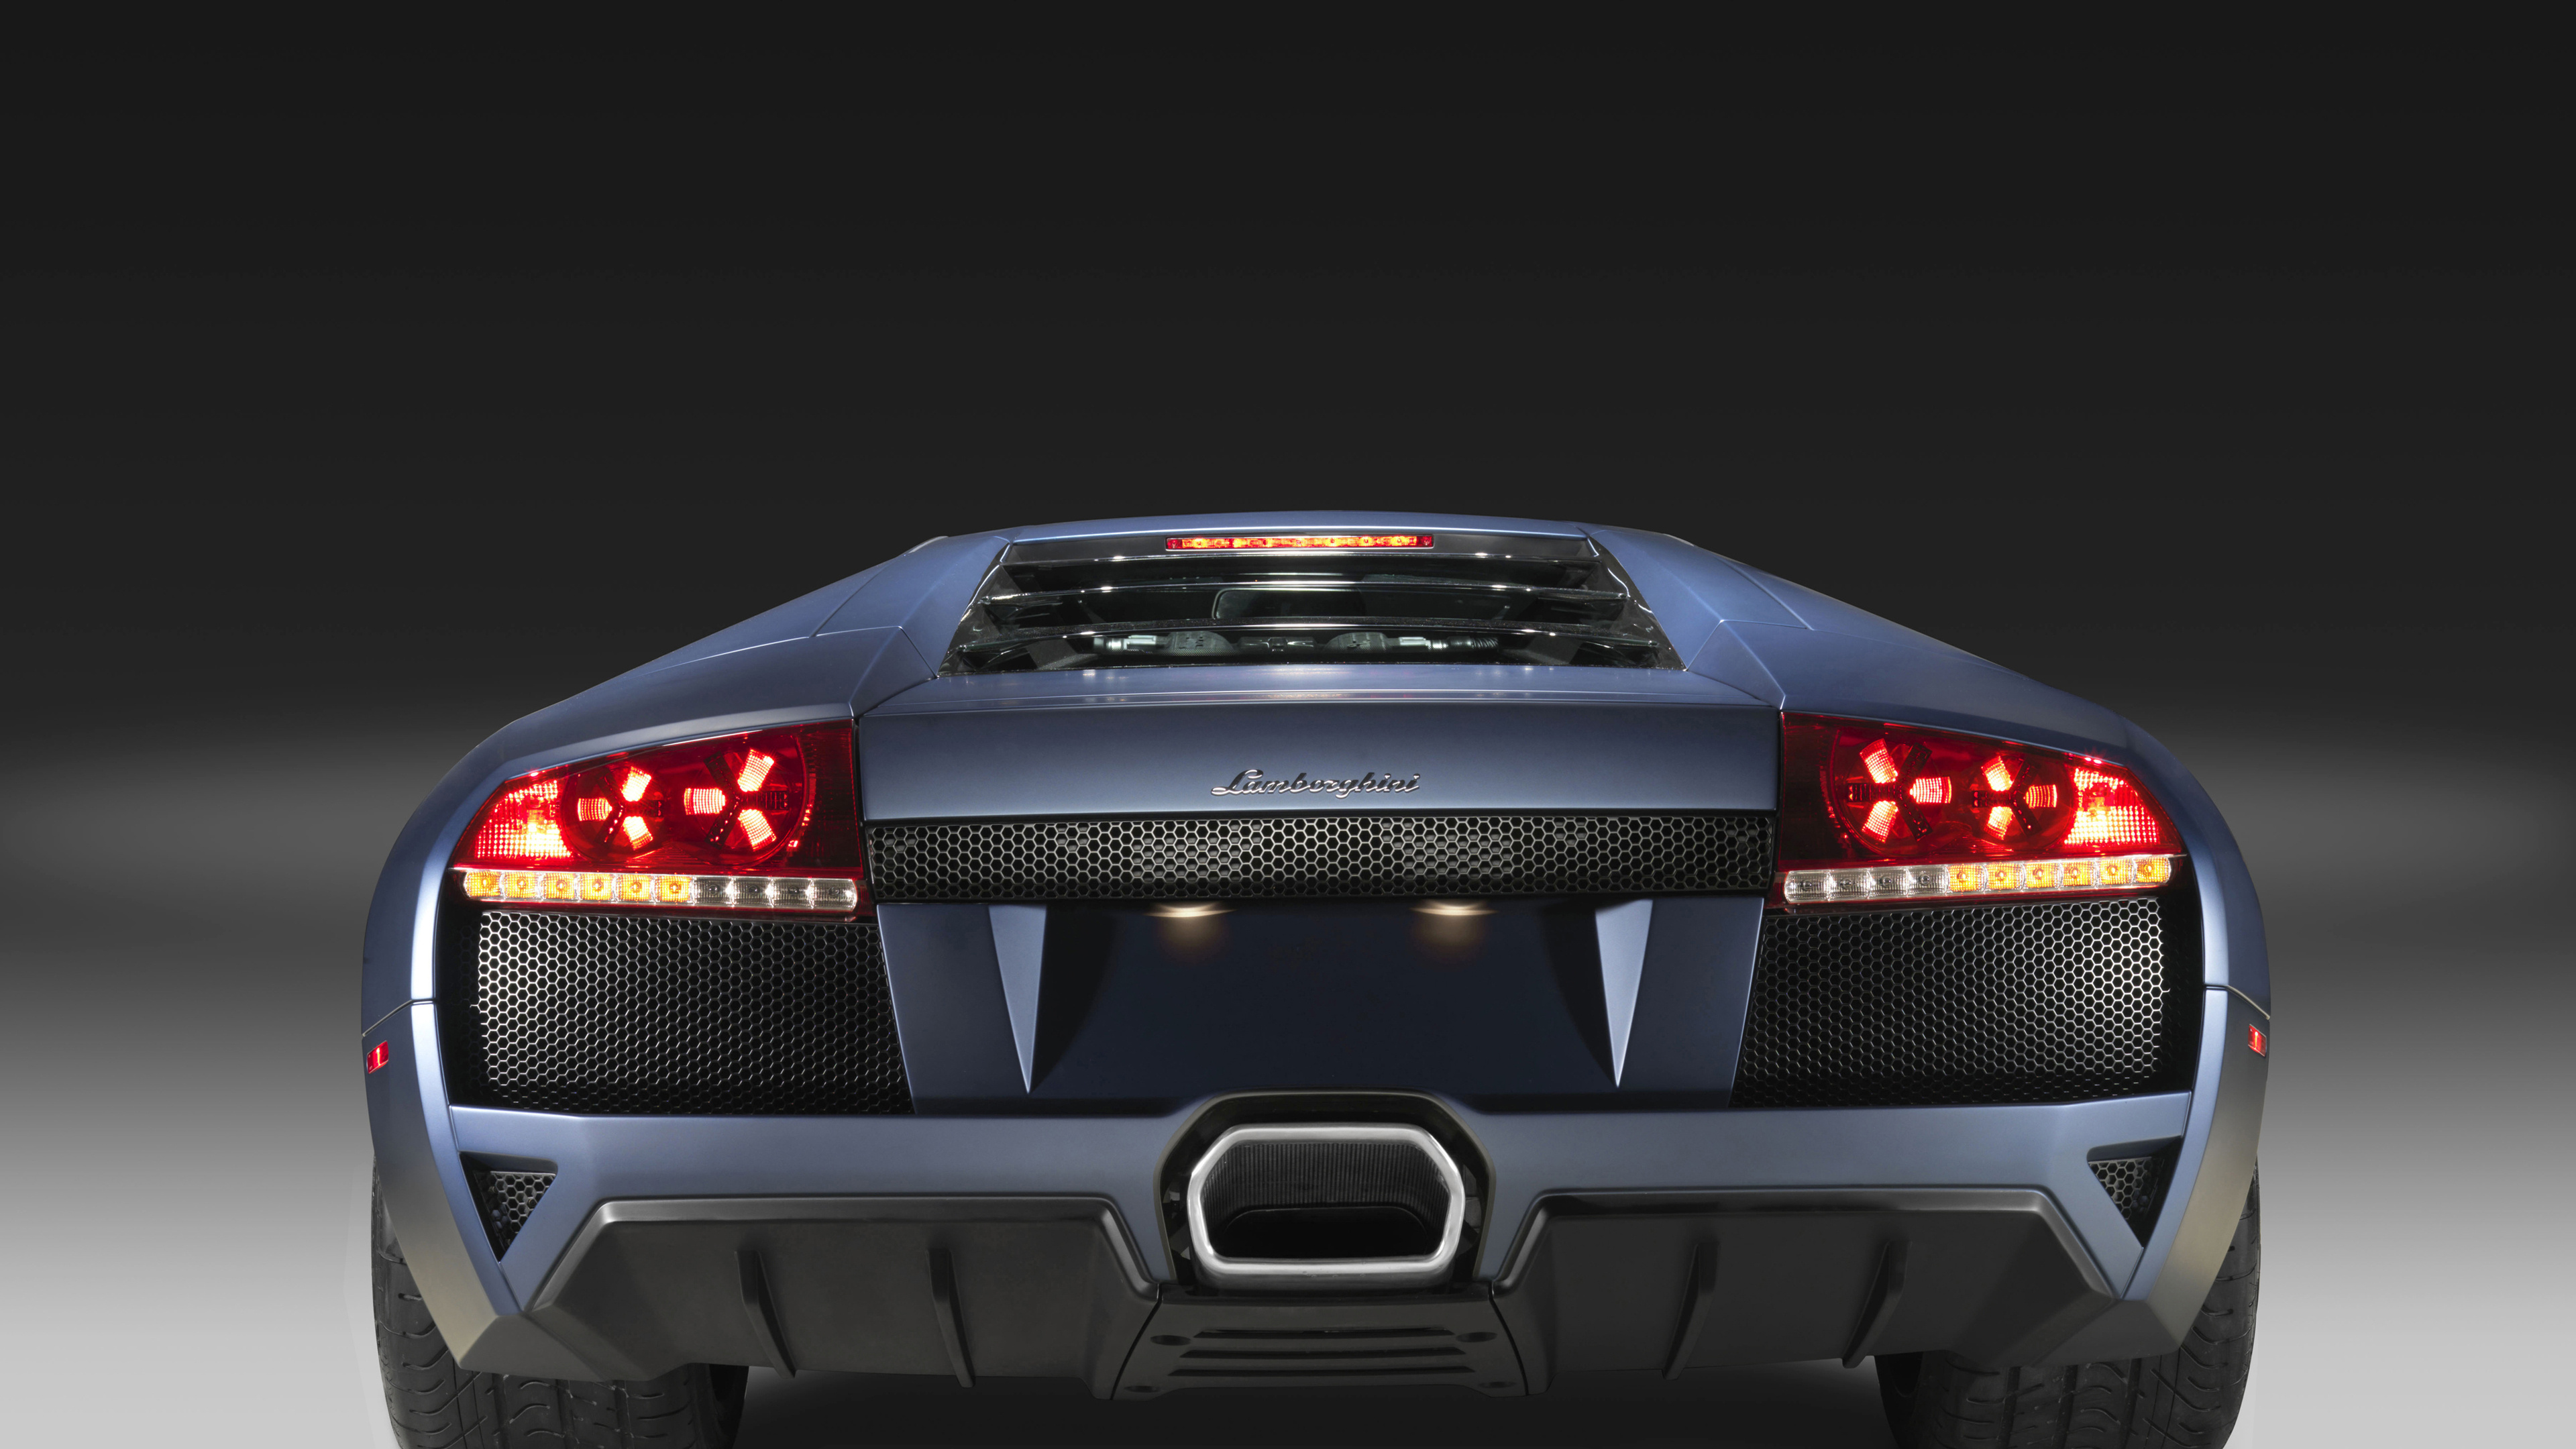 Lamborghini murcielago lp, 640 4K resolution, Exquisite design, Automotive masterpiece, 3840x2160 4K Desktop